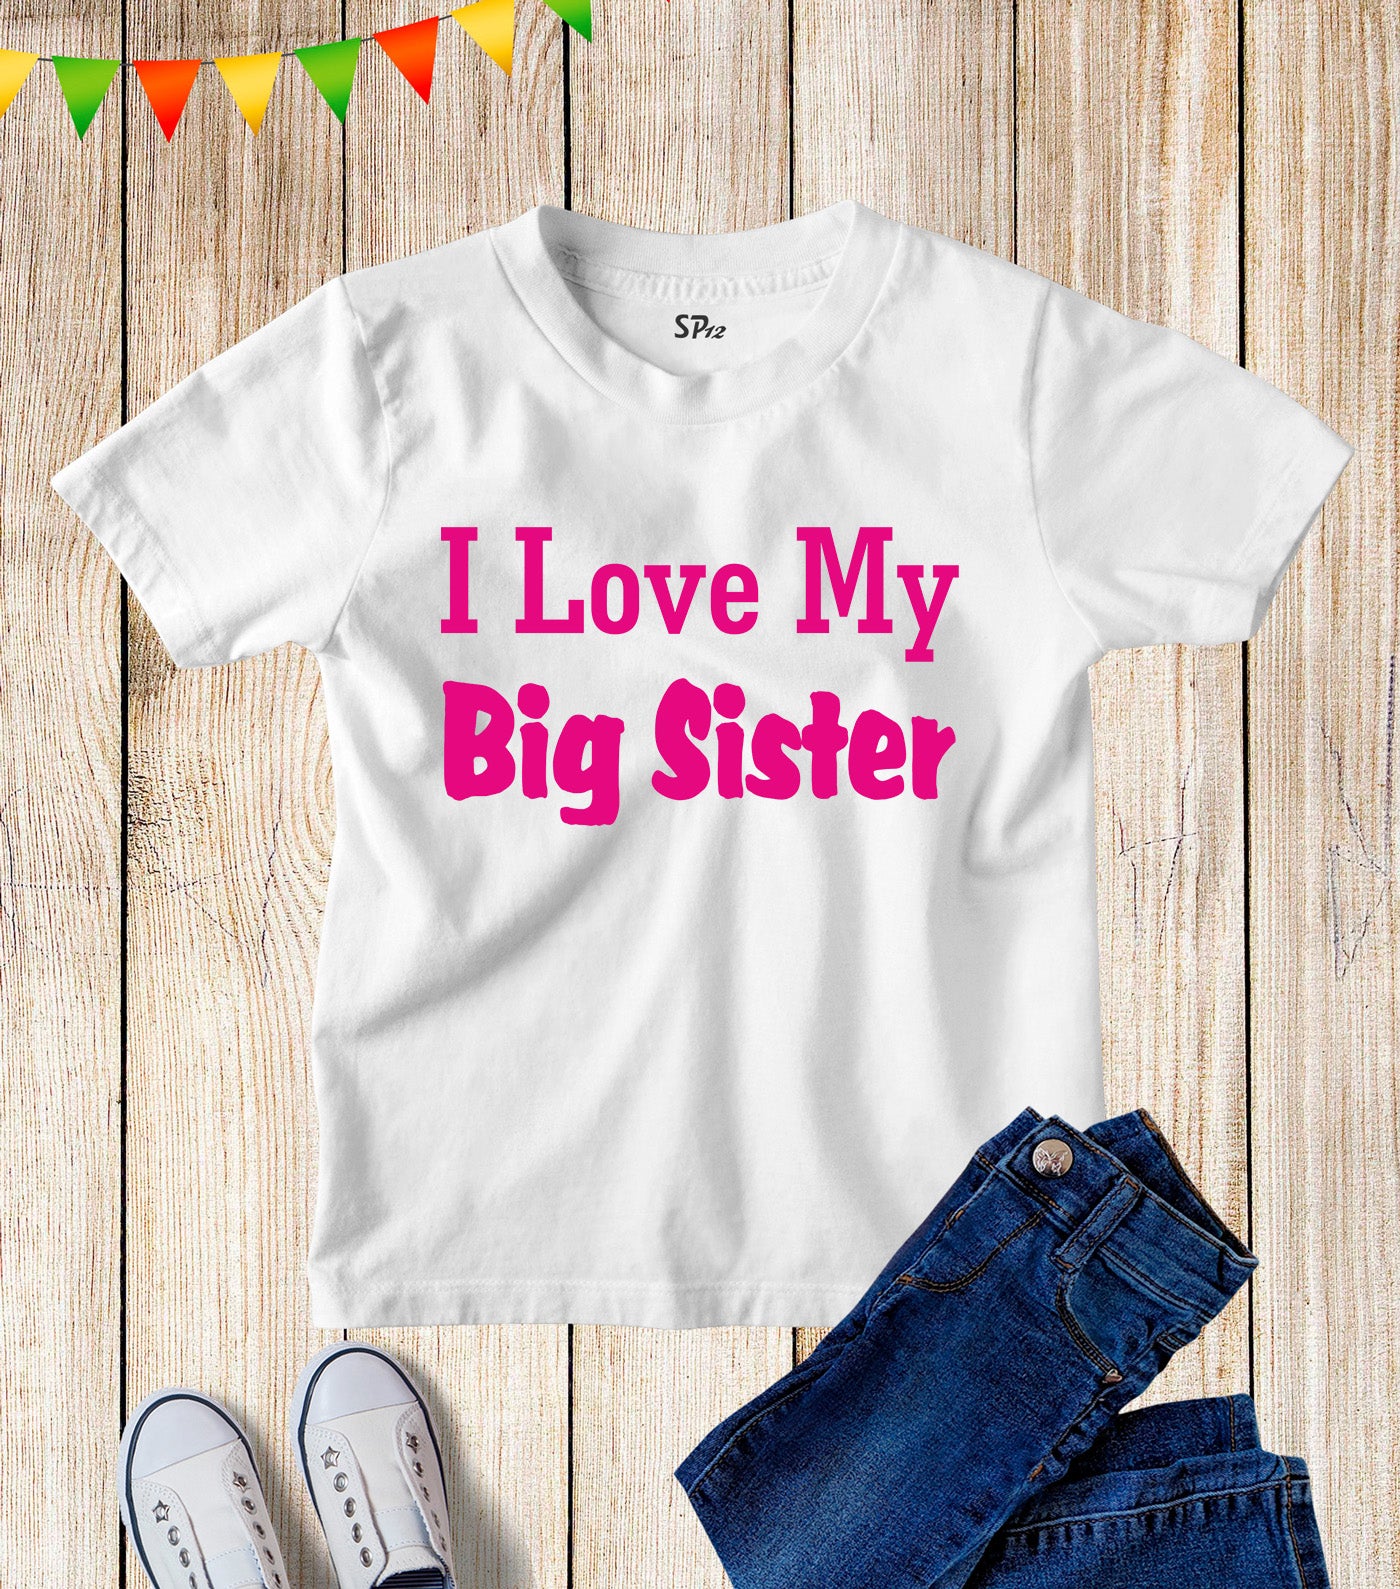 I Love My Big Sister Kids T Shirt